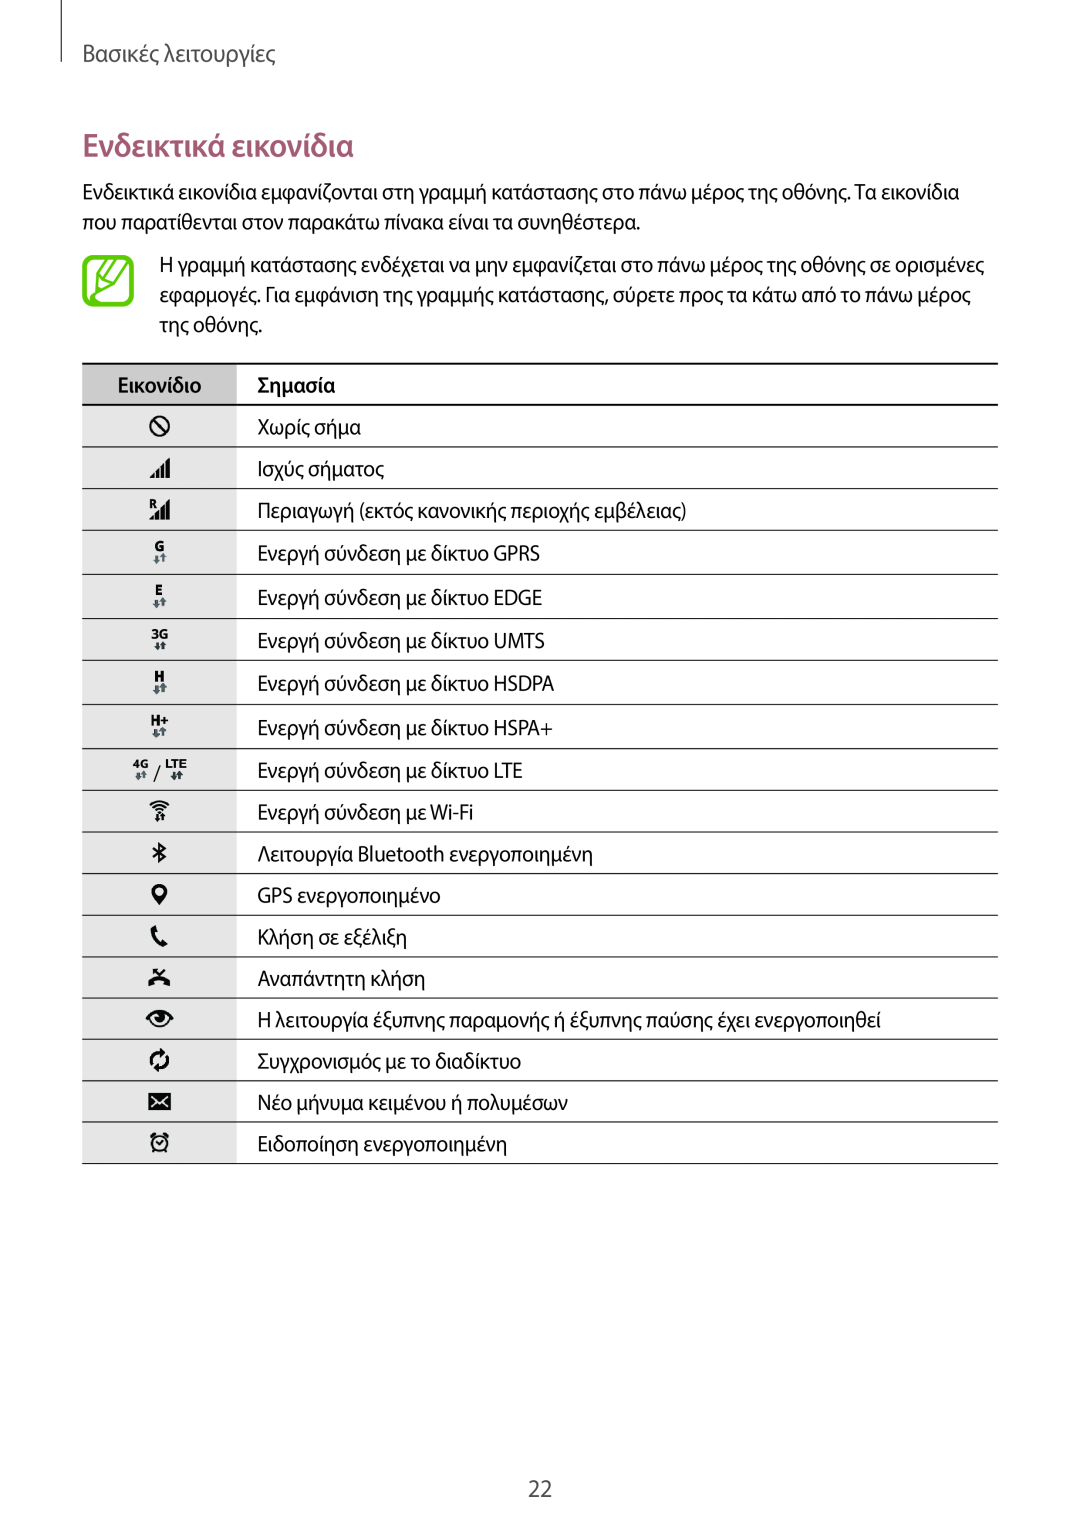 Samsung SM-T805NTSAEUR, SM-T805NZWAEUR manual Ενδεικτικά εικονίδια, Βασικές λειτουργίες, Εικονίδιο Σημασία 